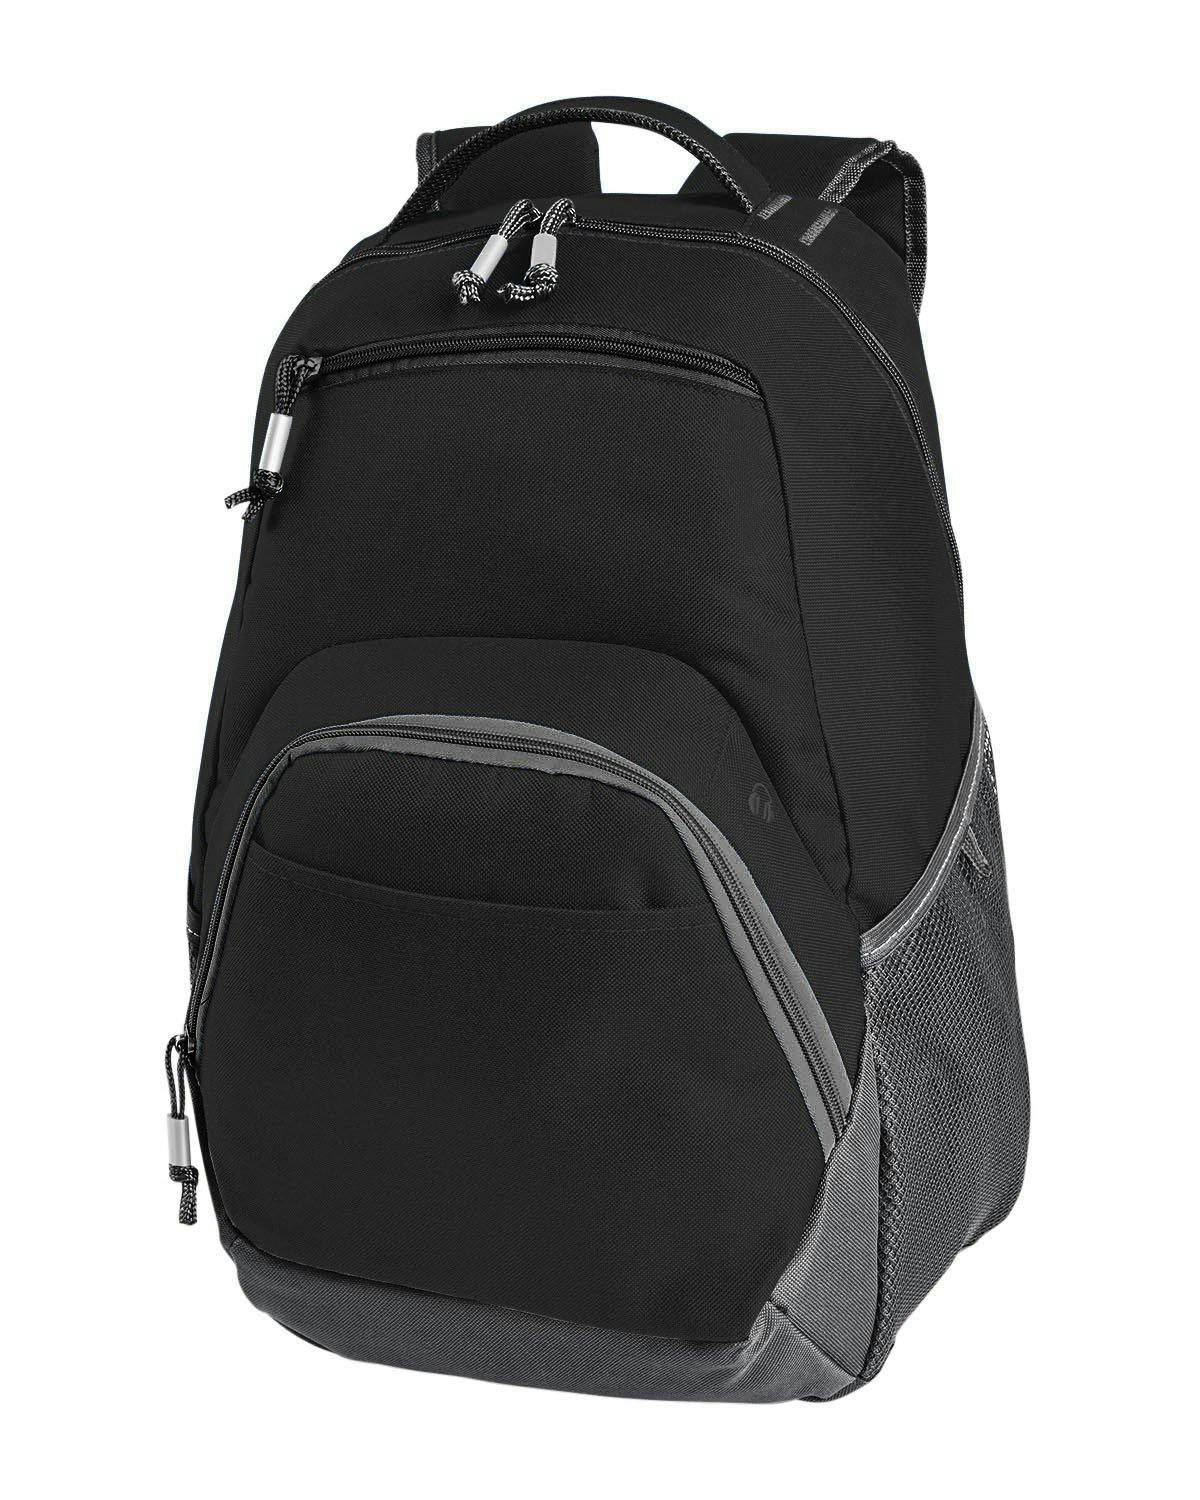 Image for Rangeley Computer Backpack